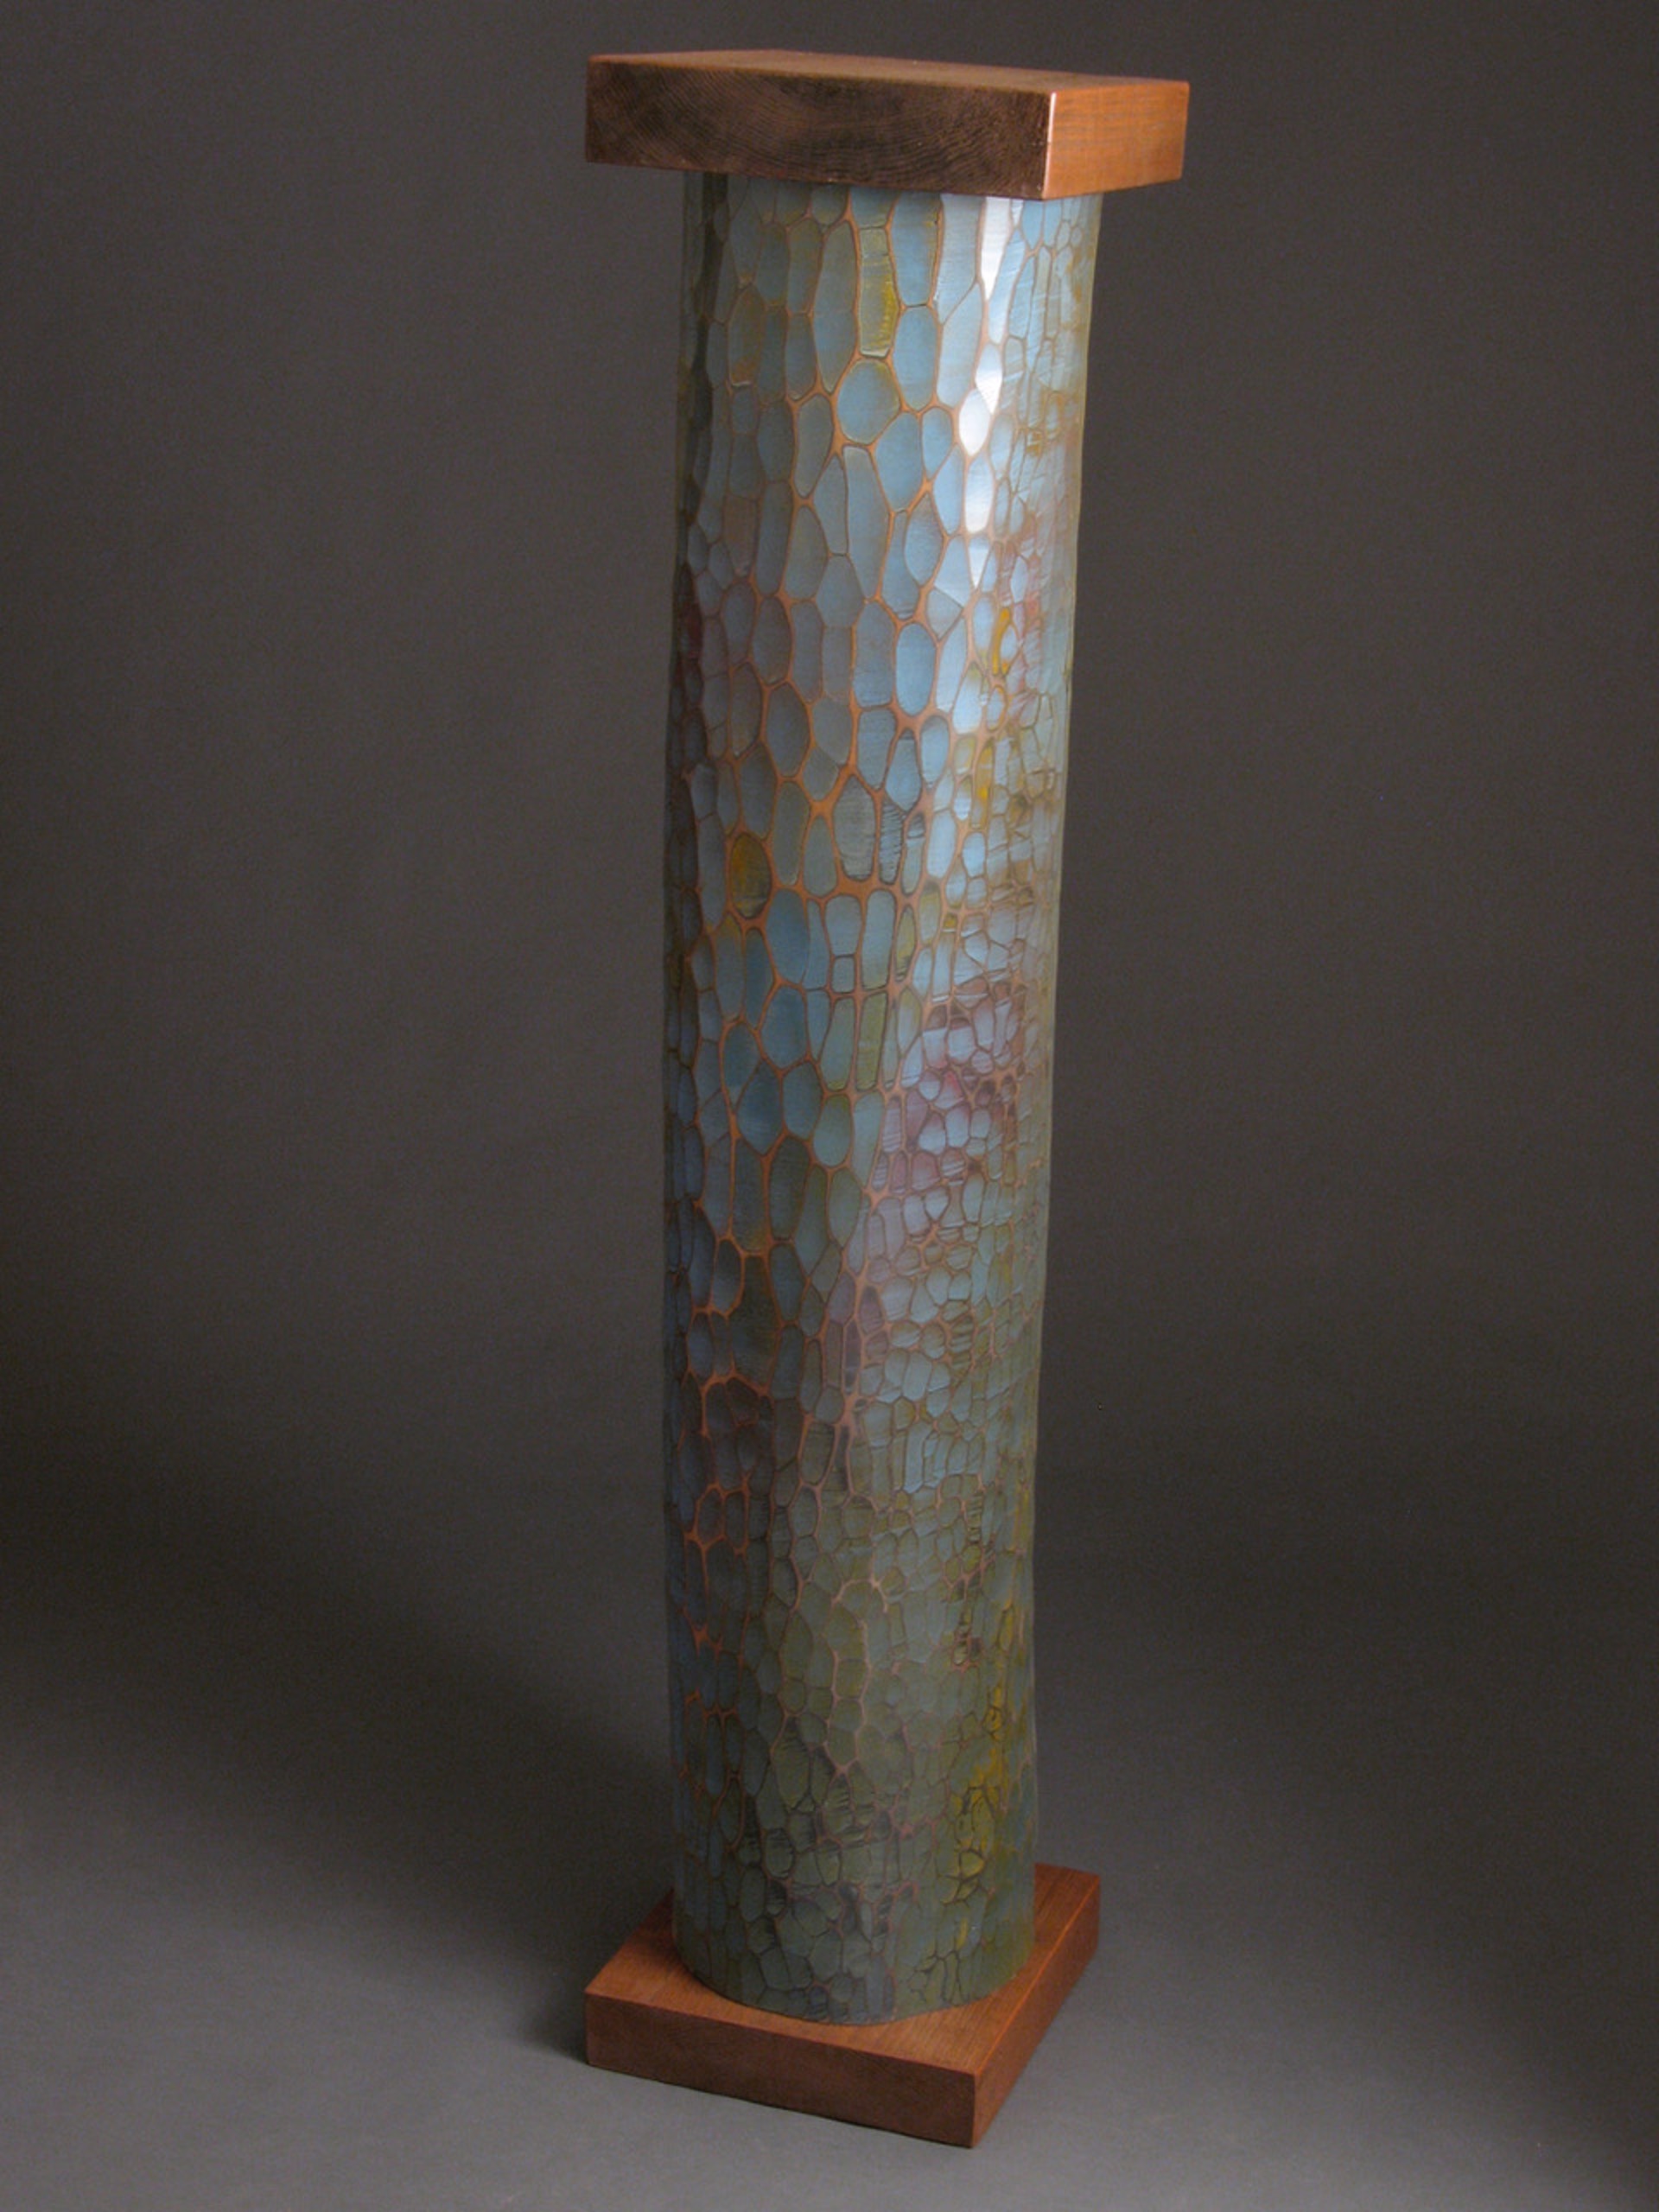 Water Column by Michael Bauermeister